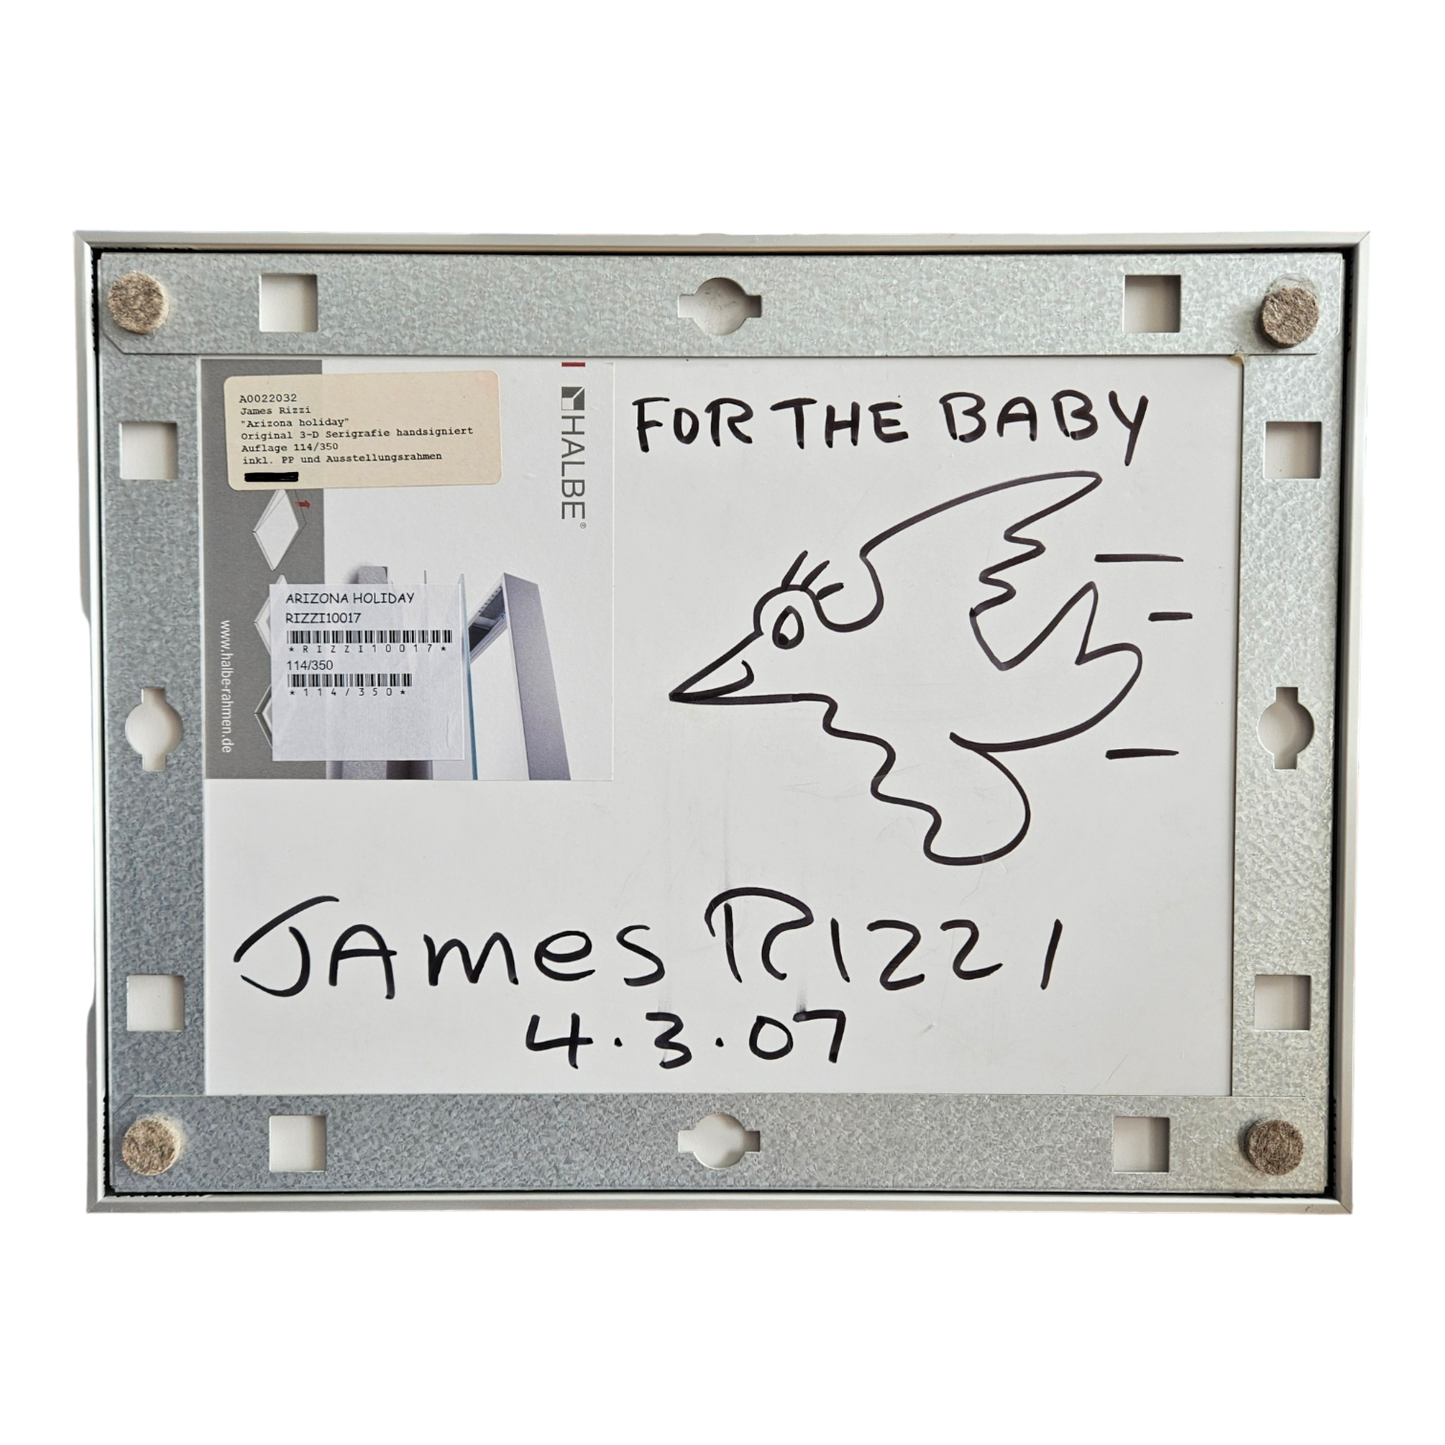 James Rizzi - Arizona Holiday (2005)